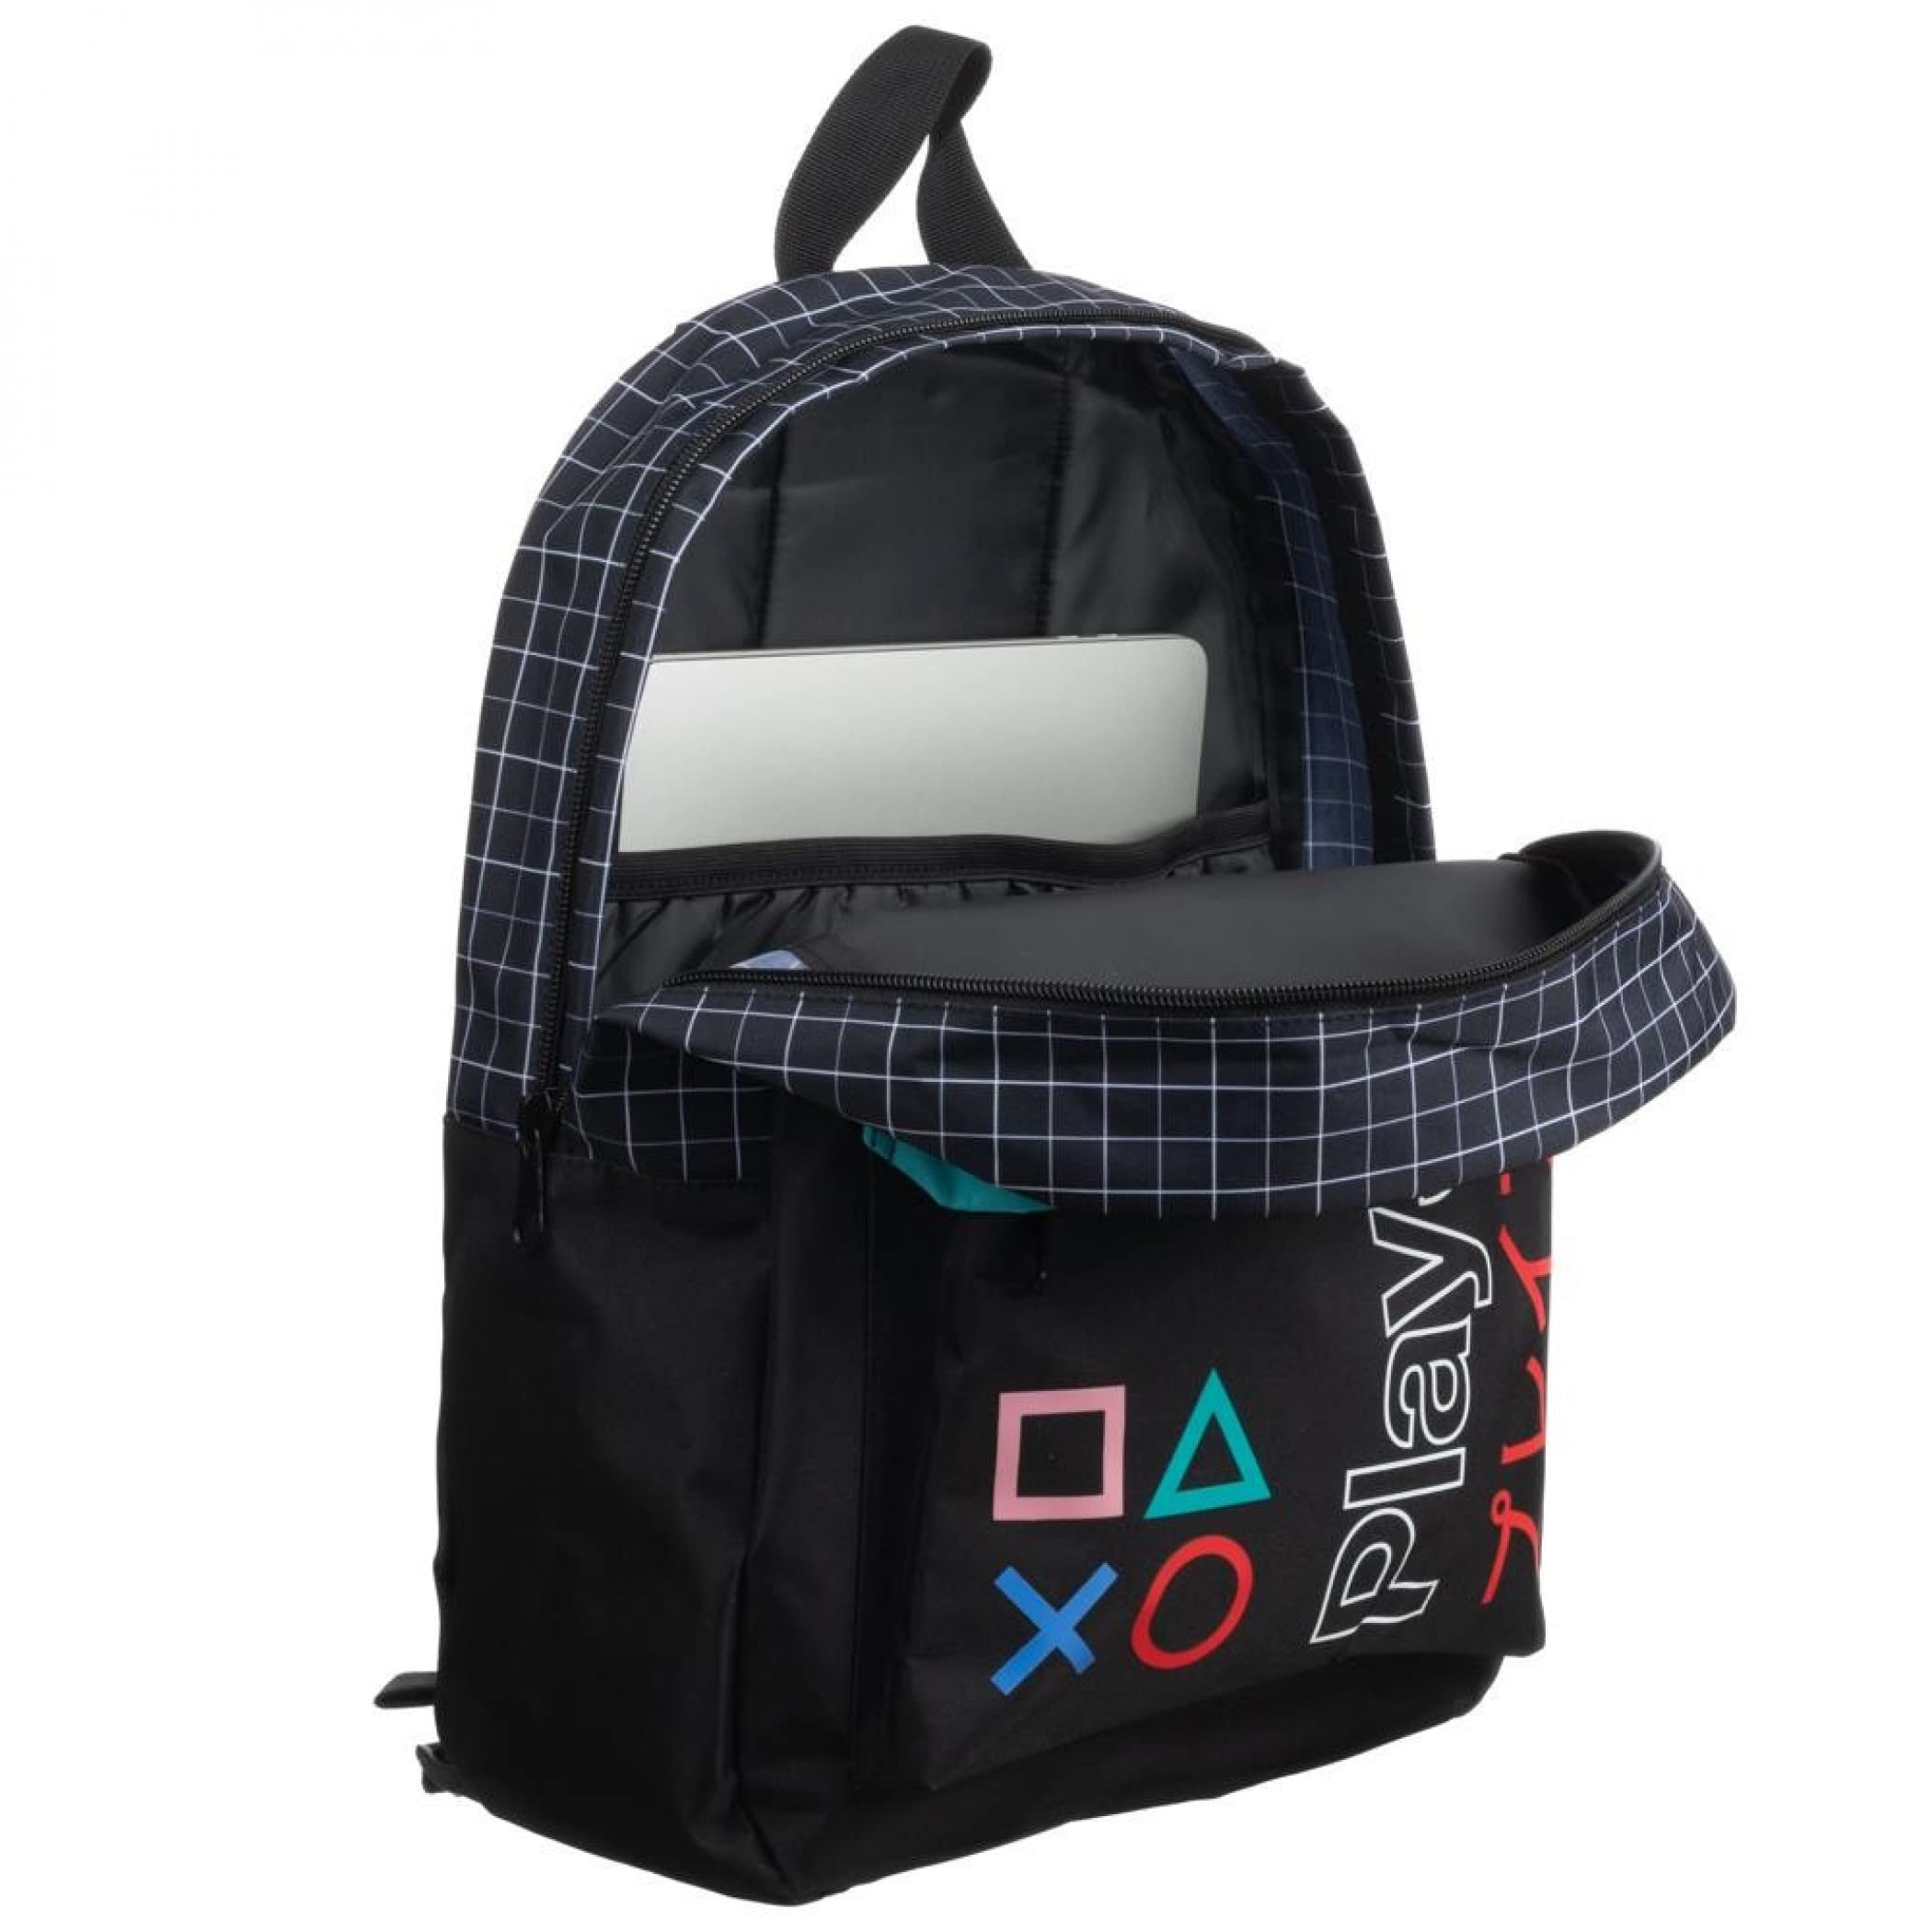 Sony Playstation 16.5" Kanji Color Block Laptop Backpack with Adjustable Straps